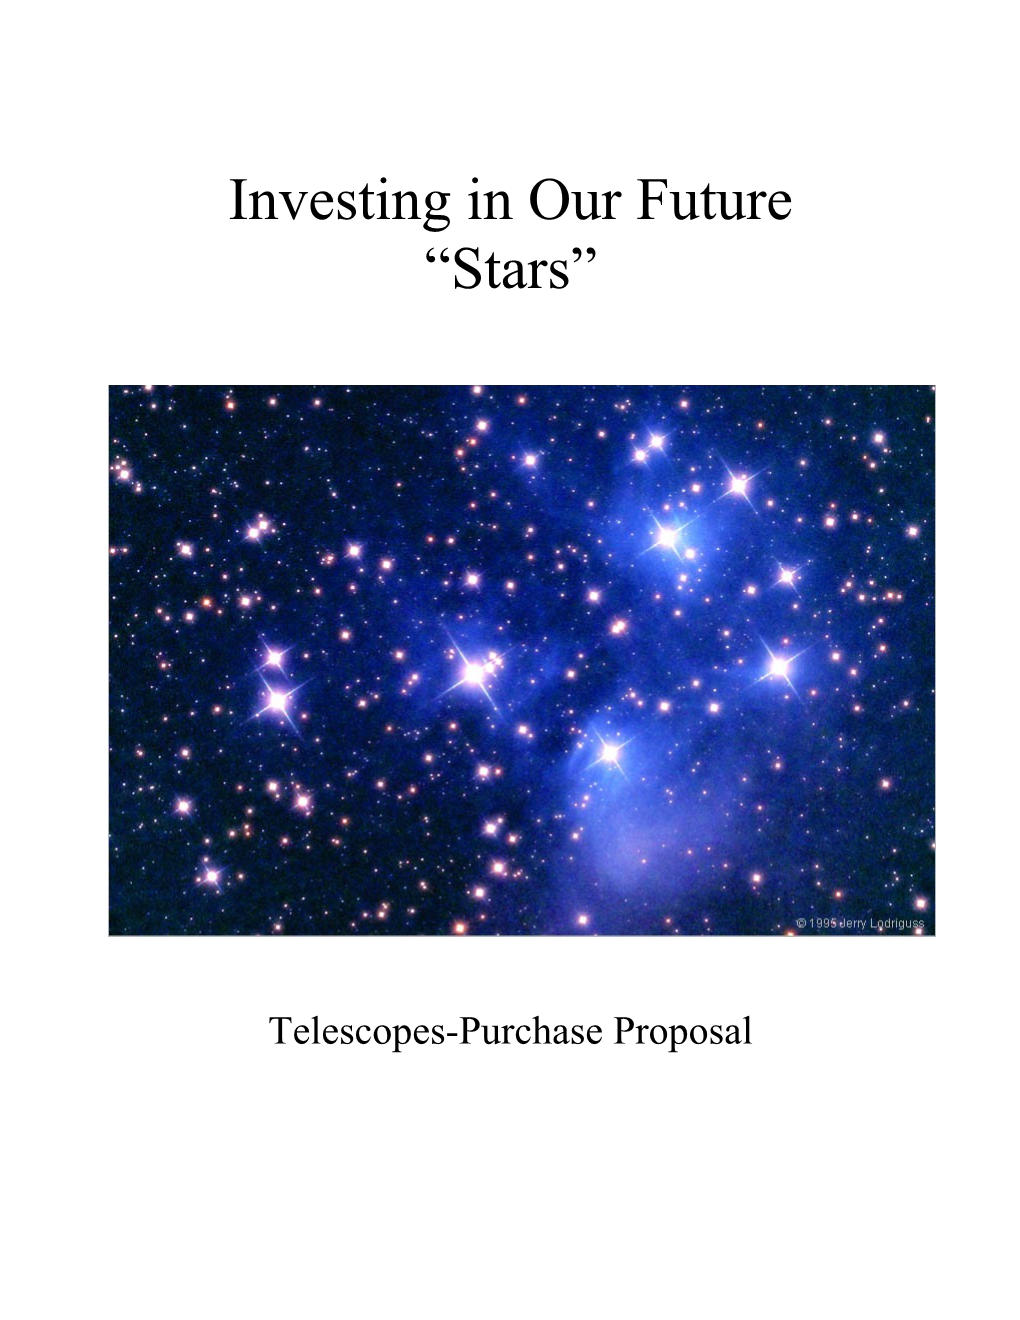 Telescopes-Purchase Proposal